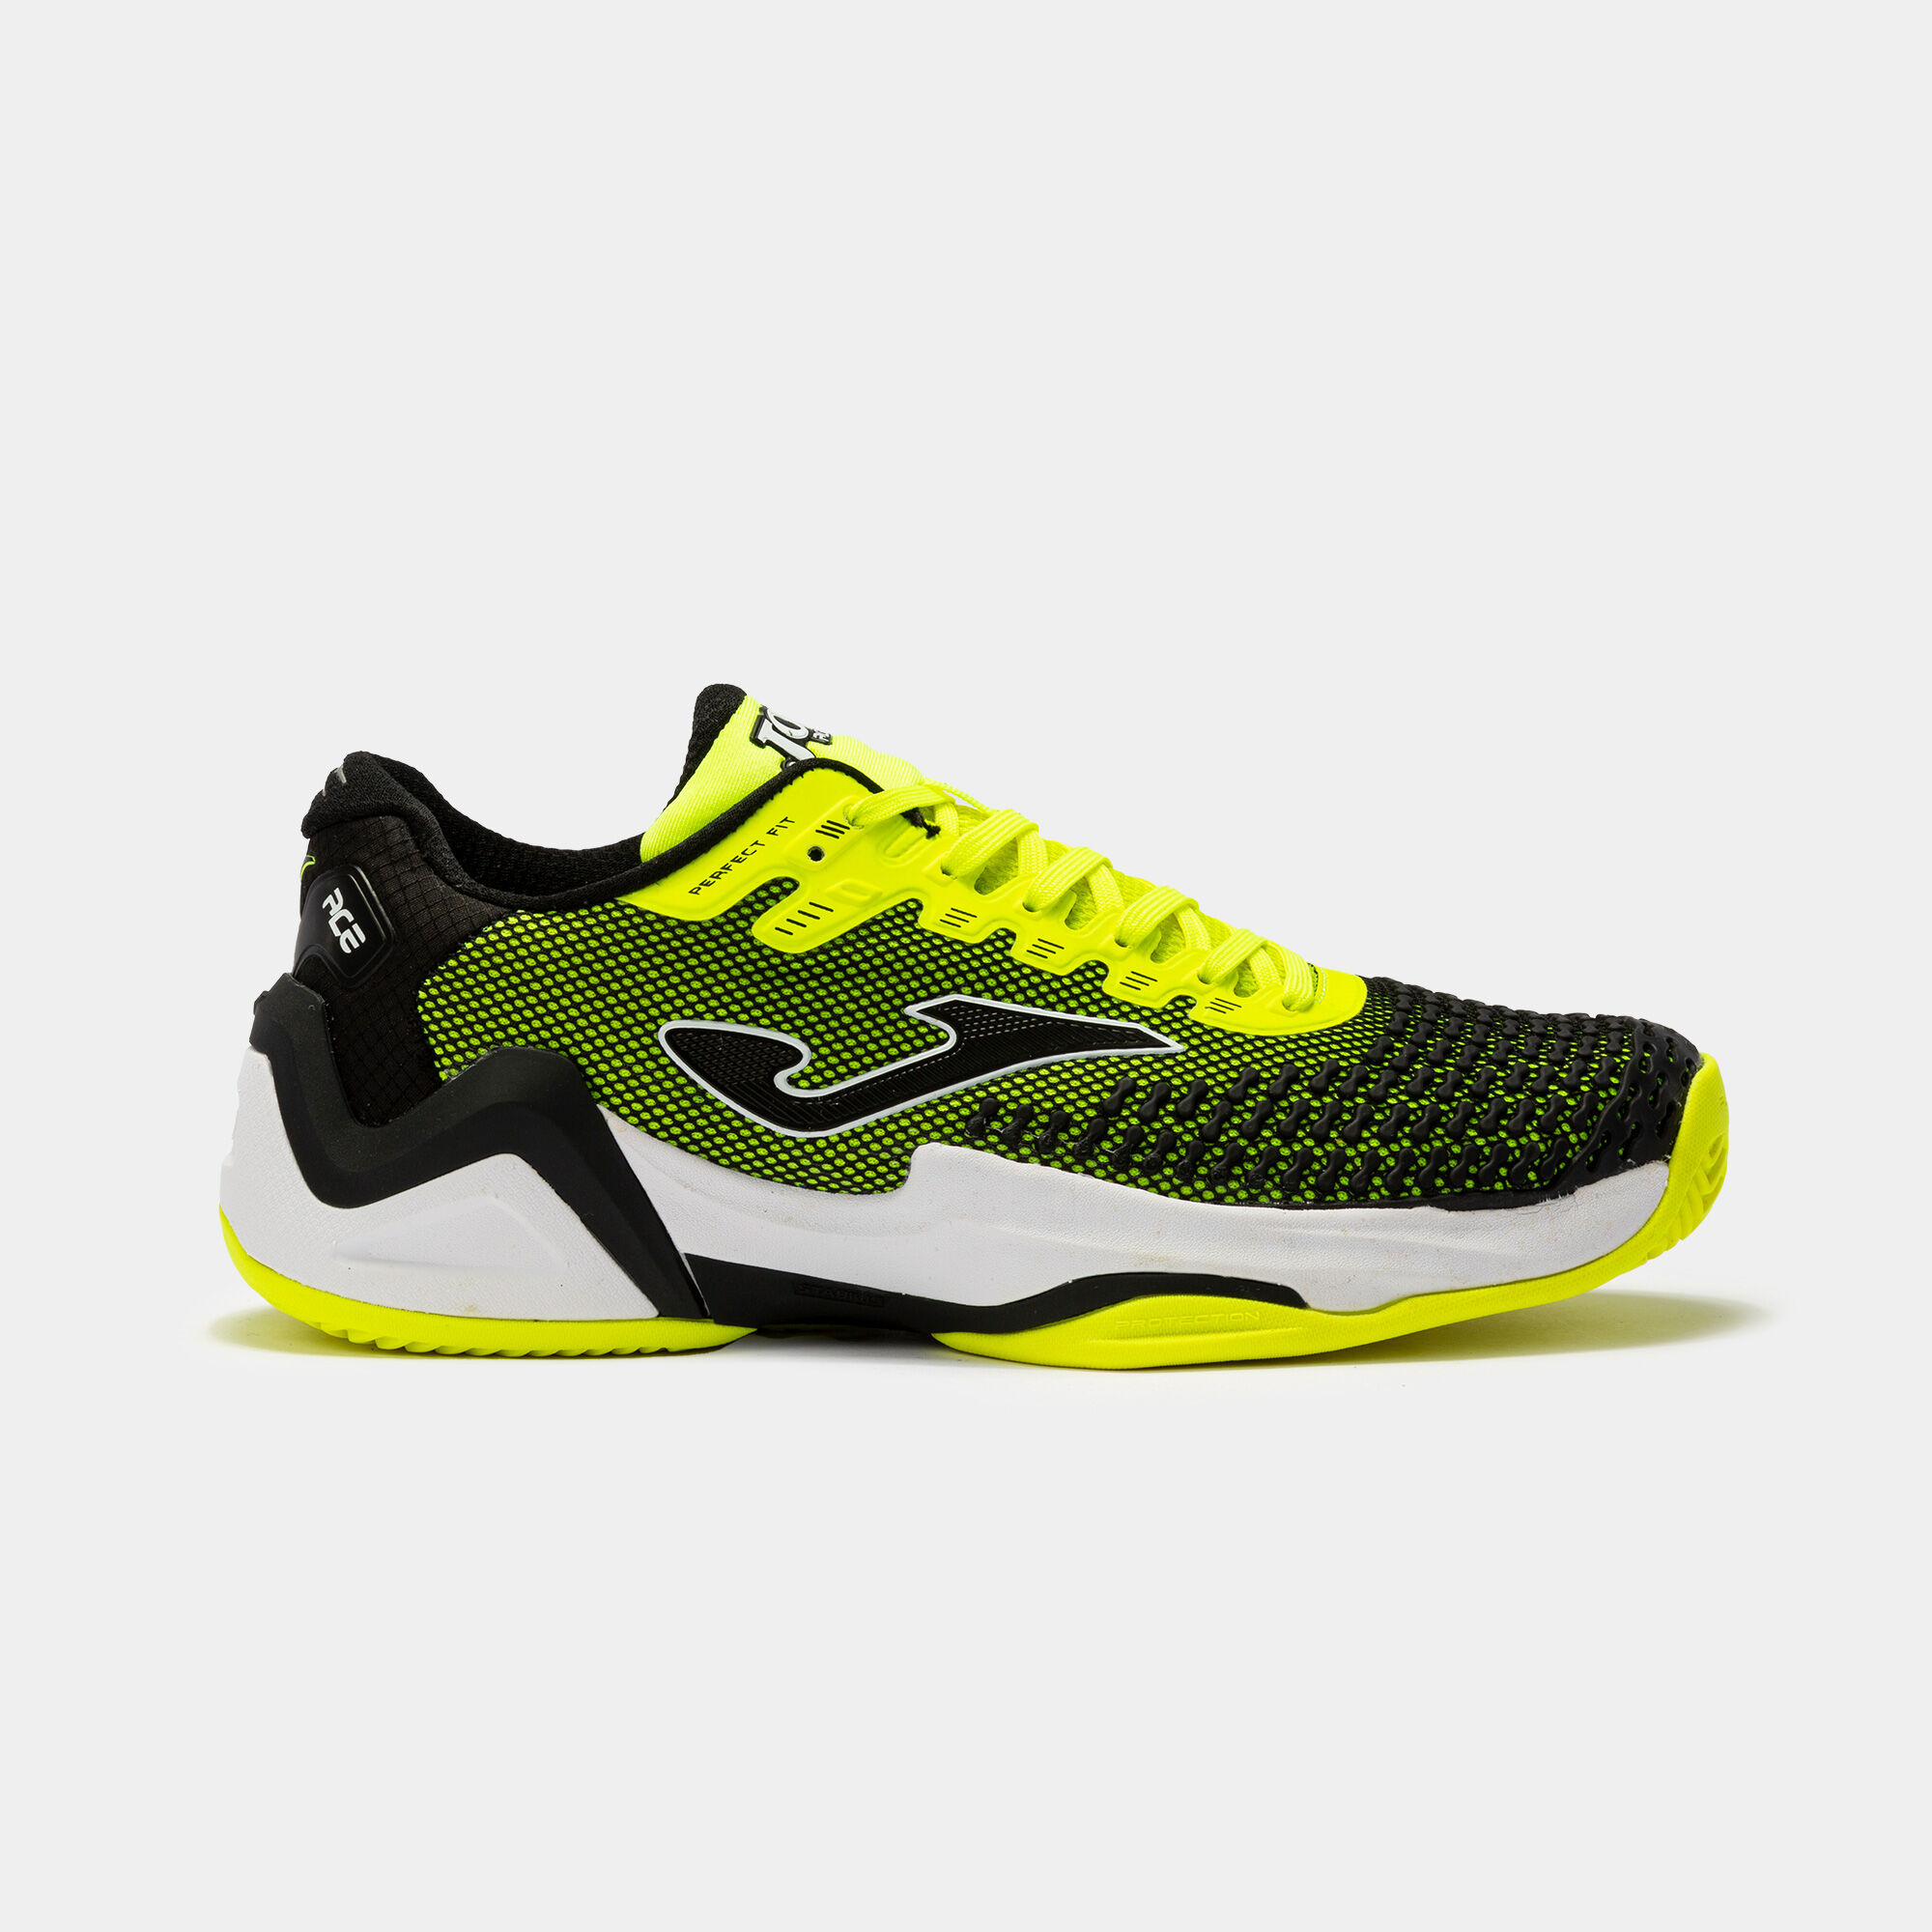 Shoes Pro 22 man fluorescent yellow black